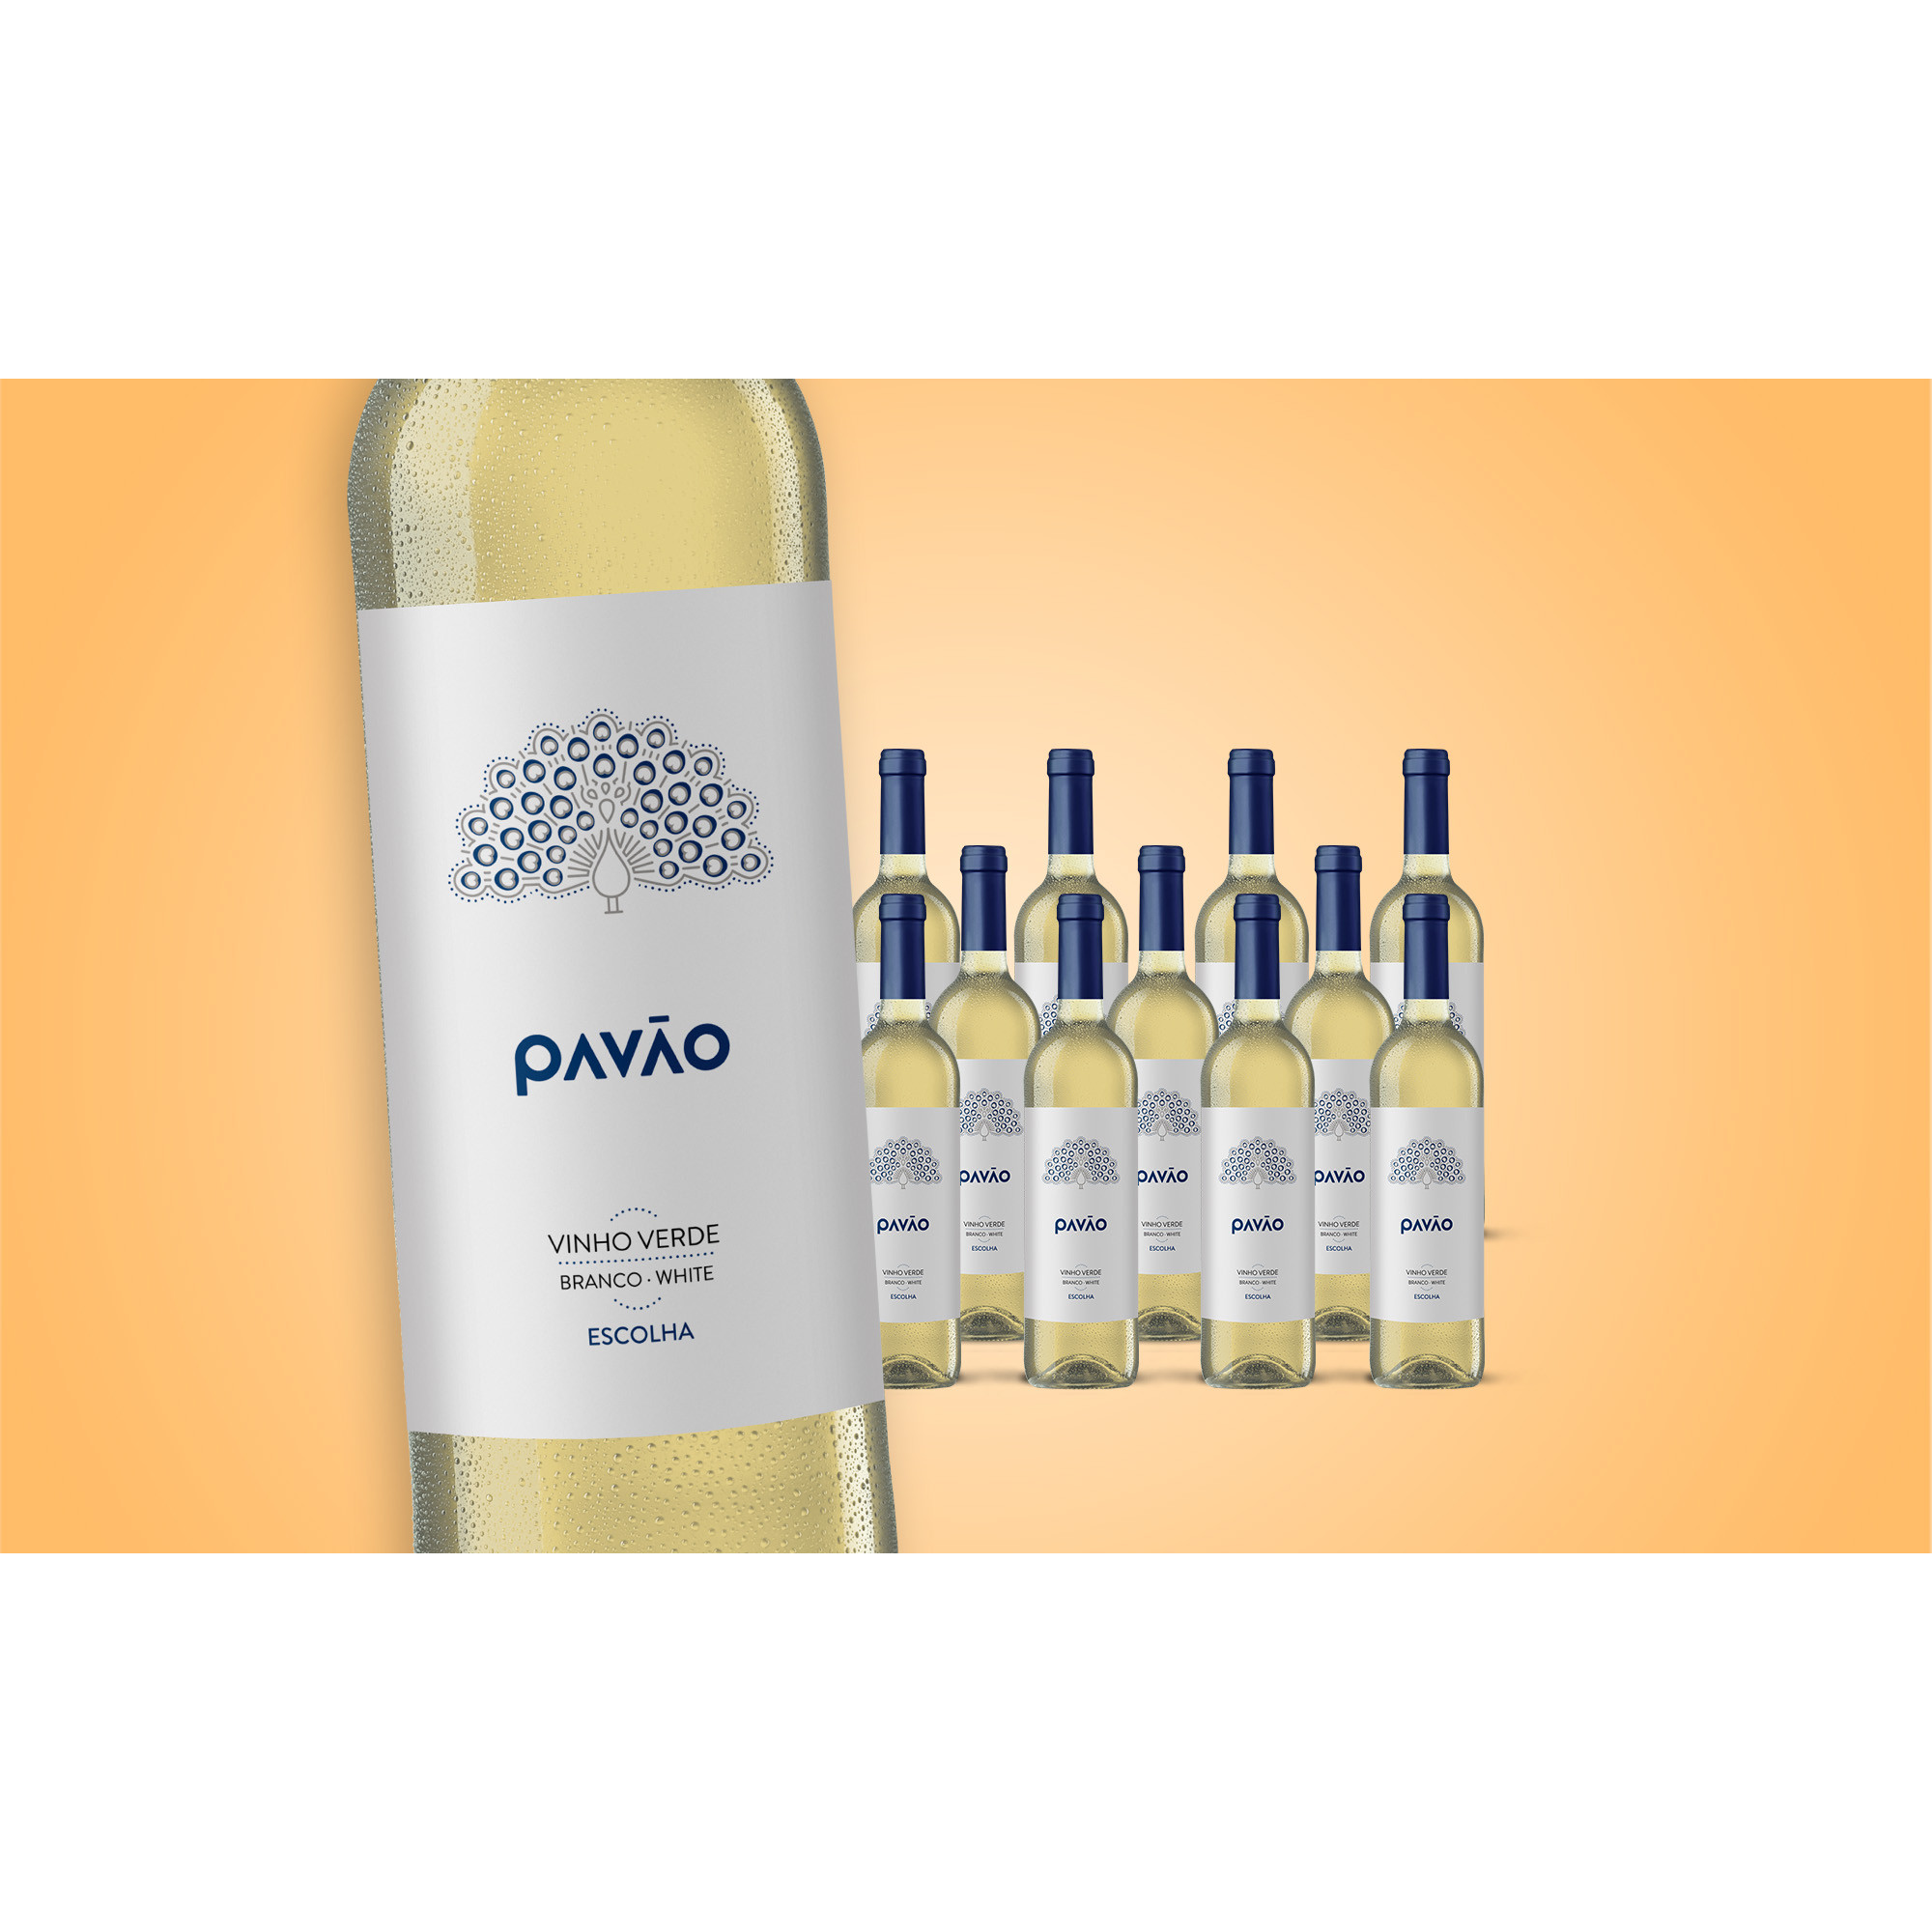 Pavão Escolha Vinho Verde Branco 2021  9L Halbtrocken Weinpaket aus Spanien 34967 vinos DE